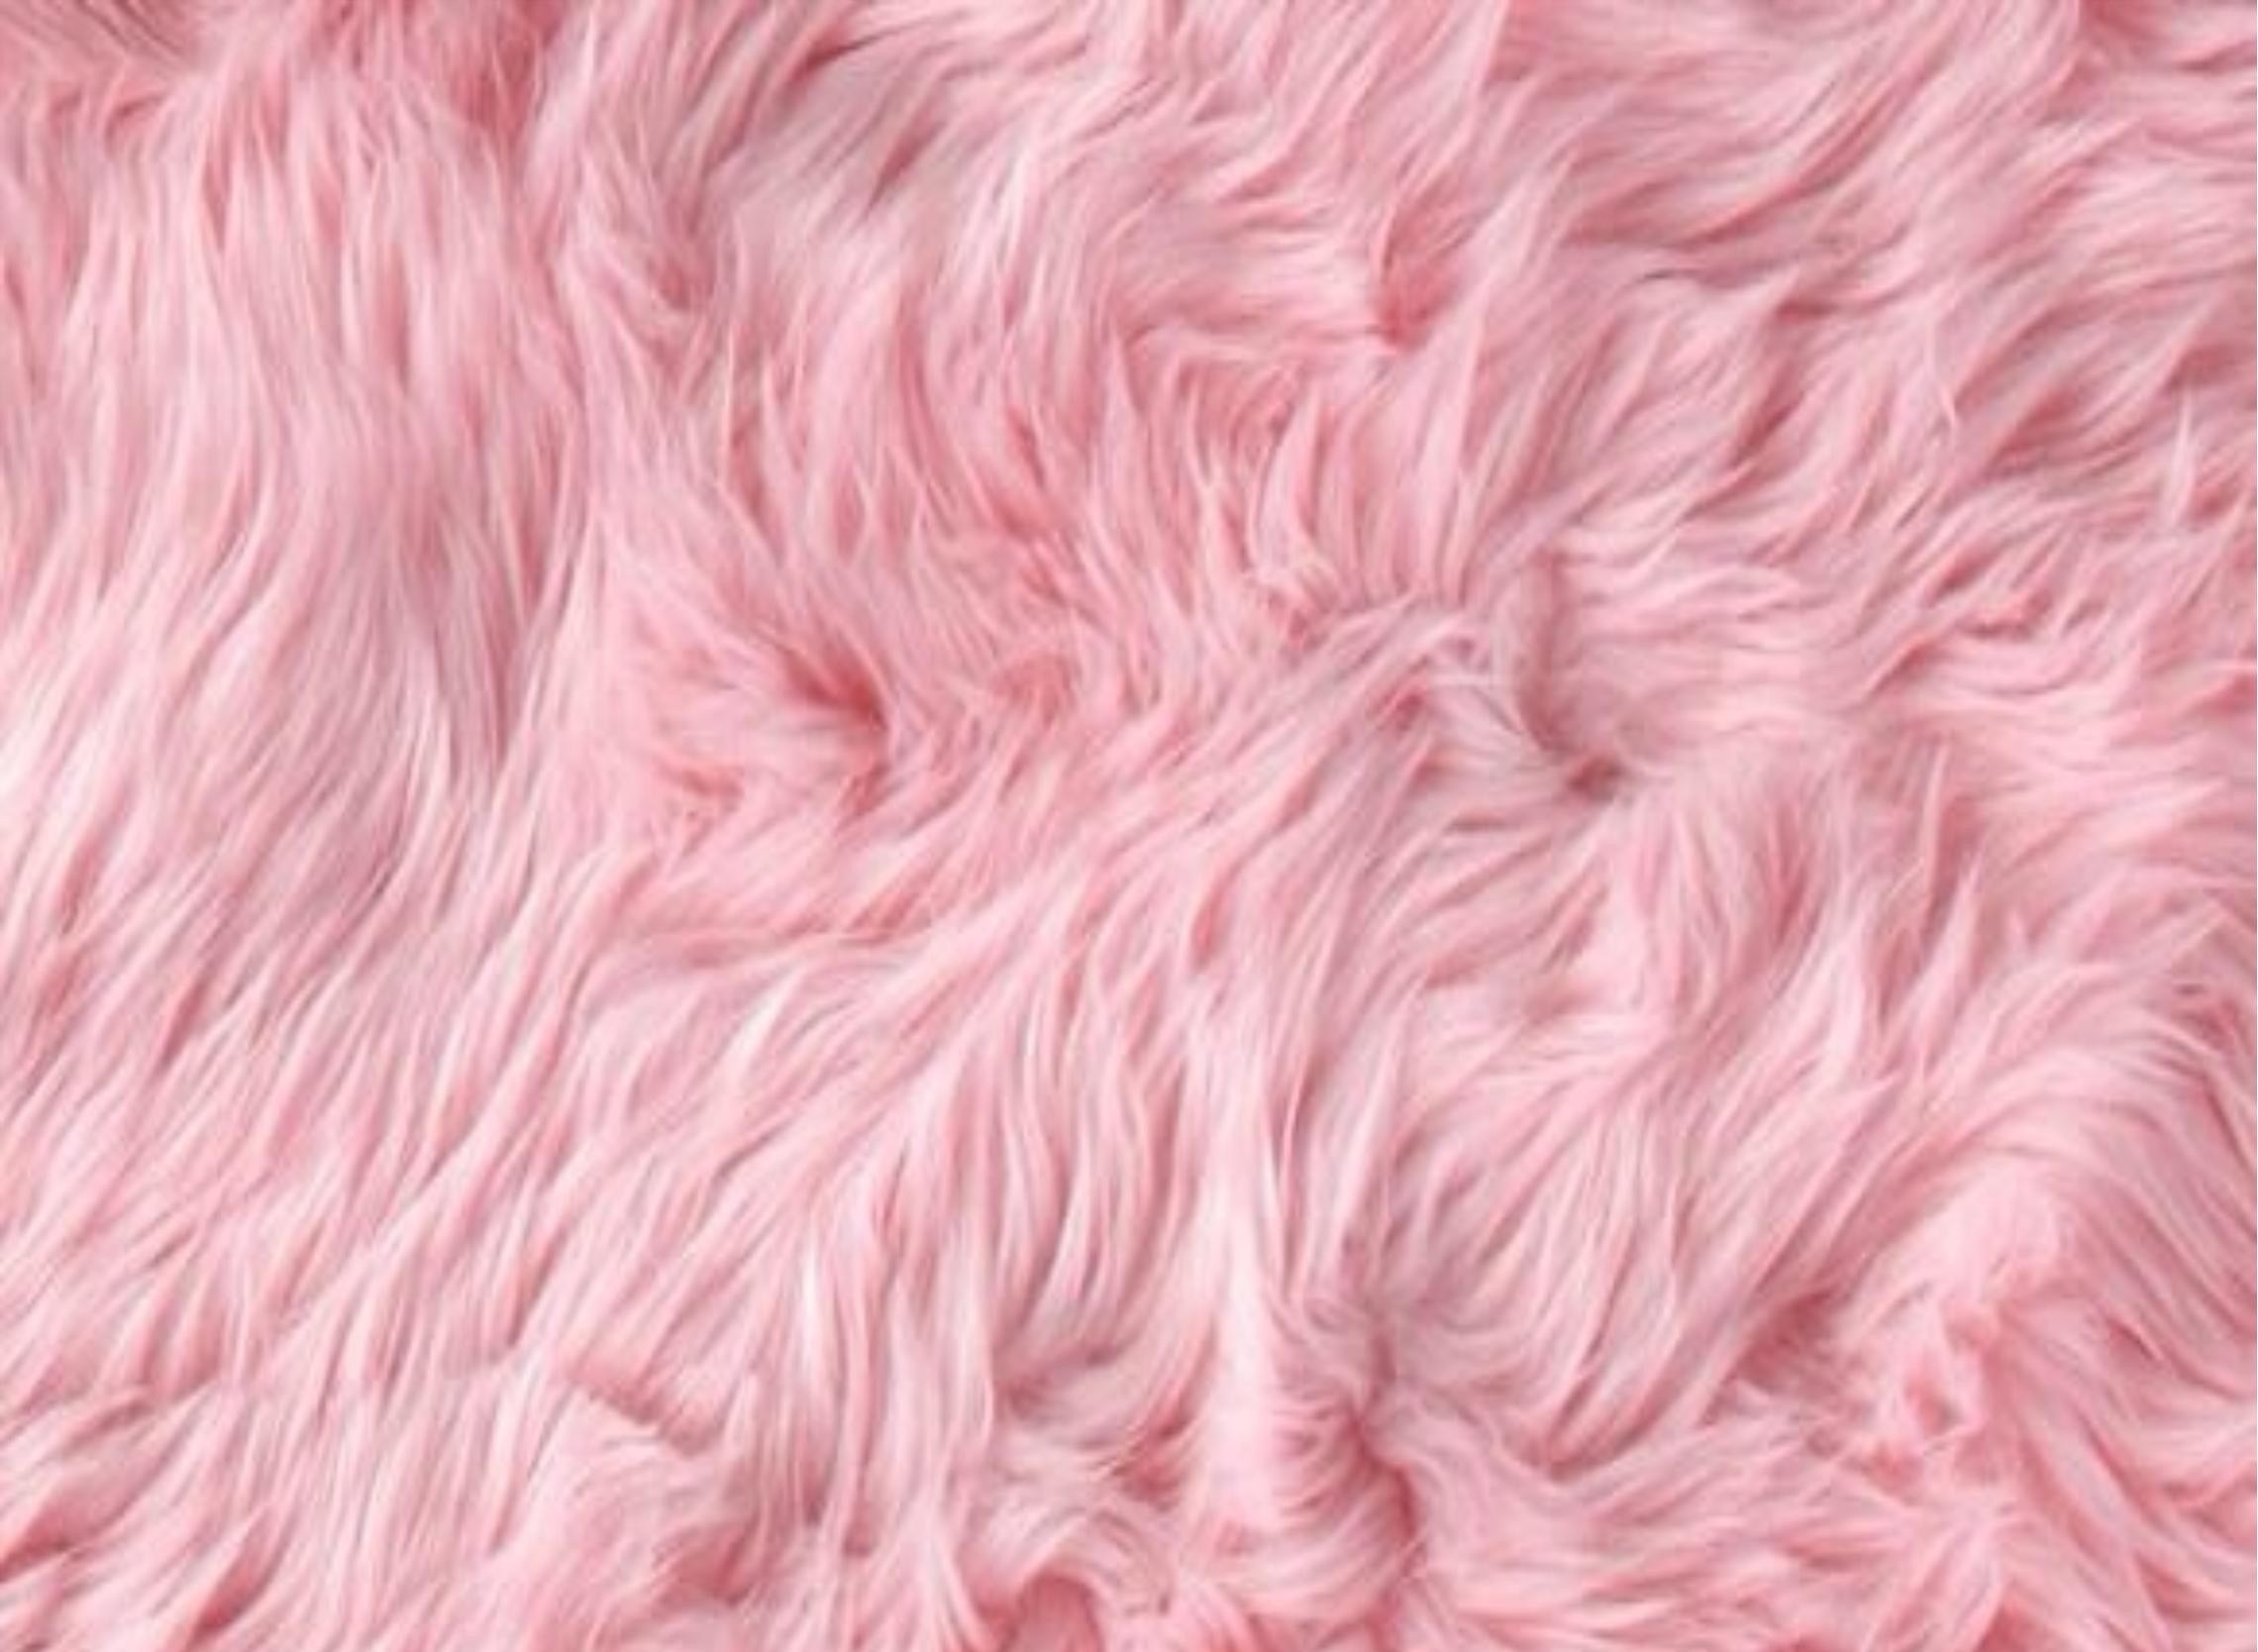 wallpaper tumblr hd,fur,pink,textile,wool,close up